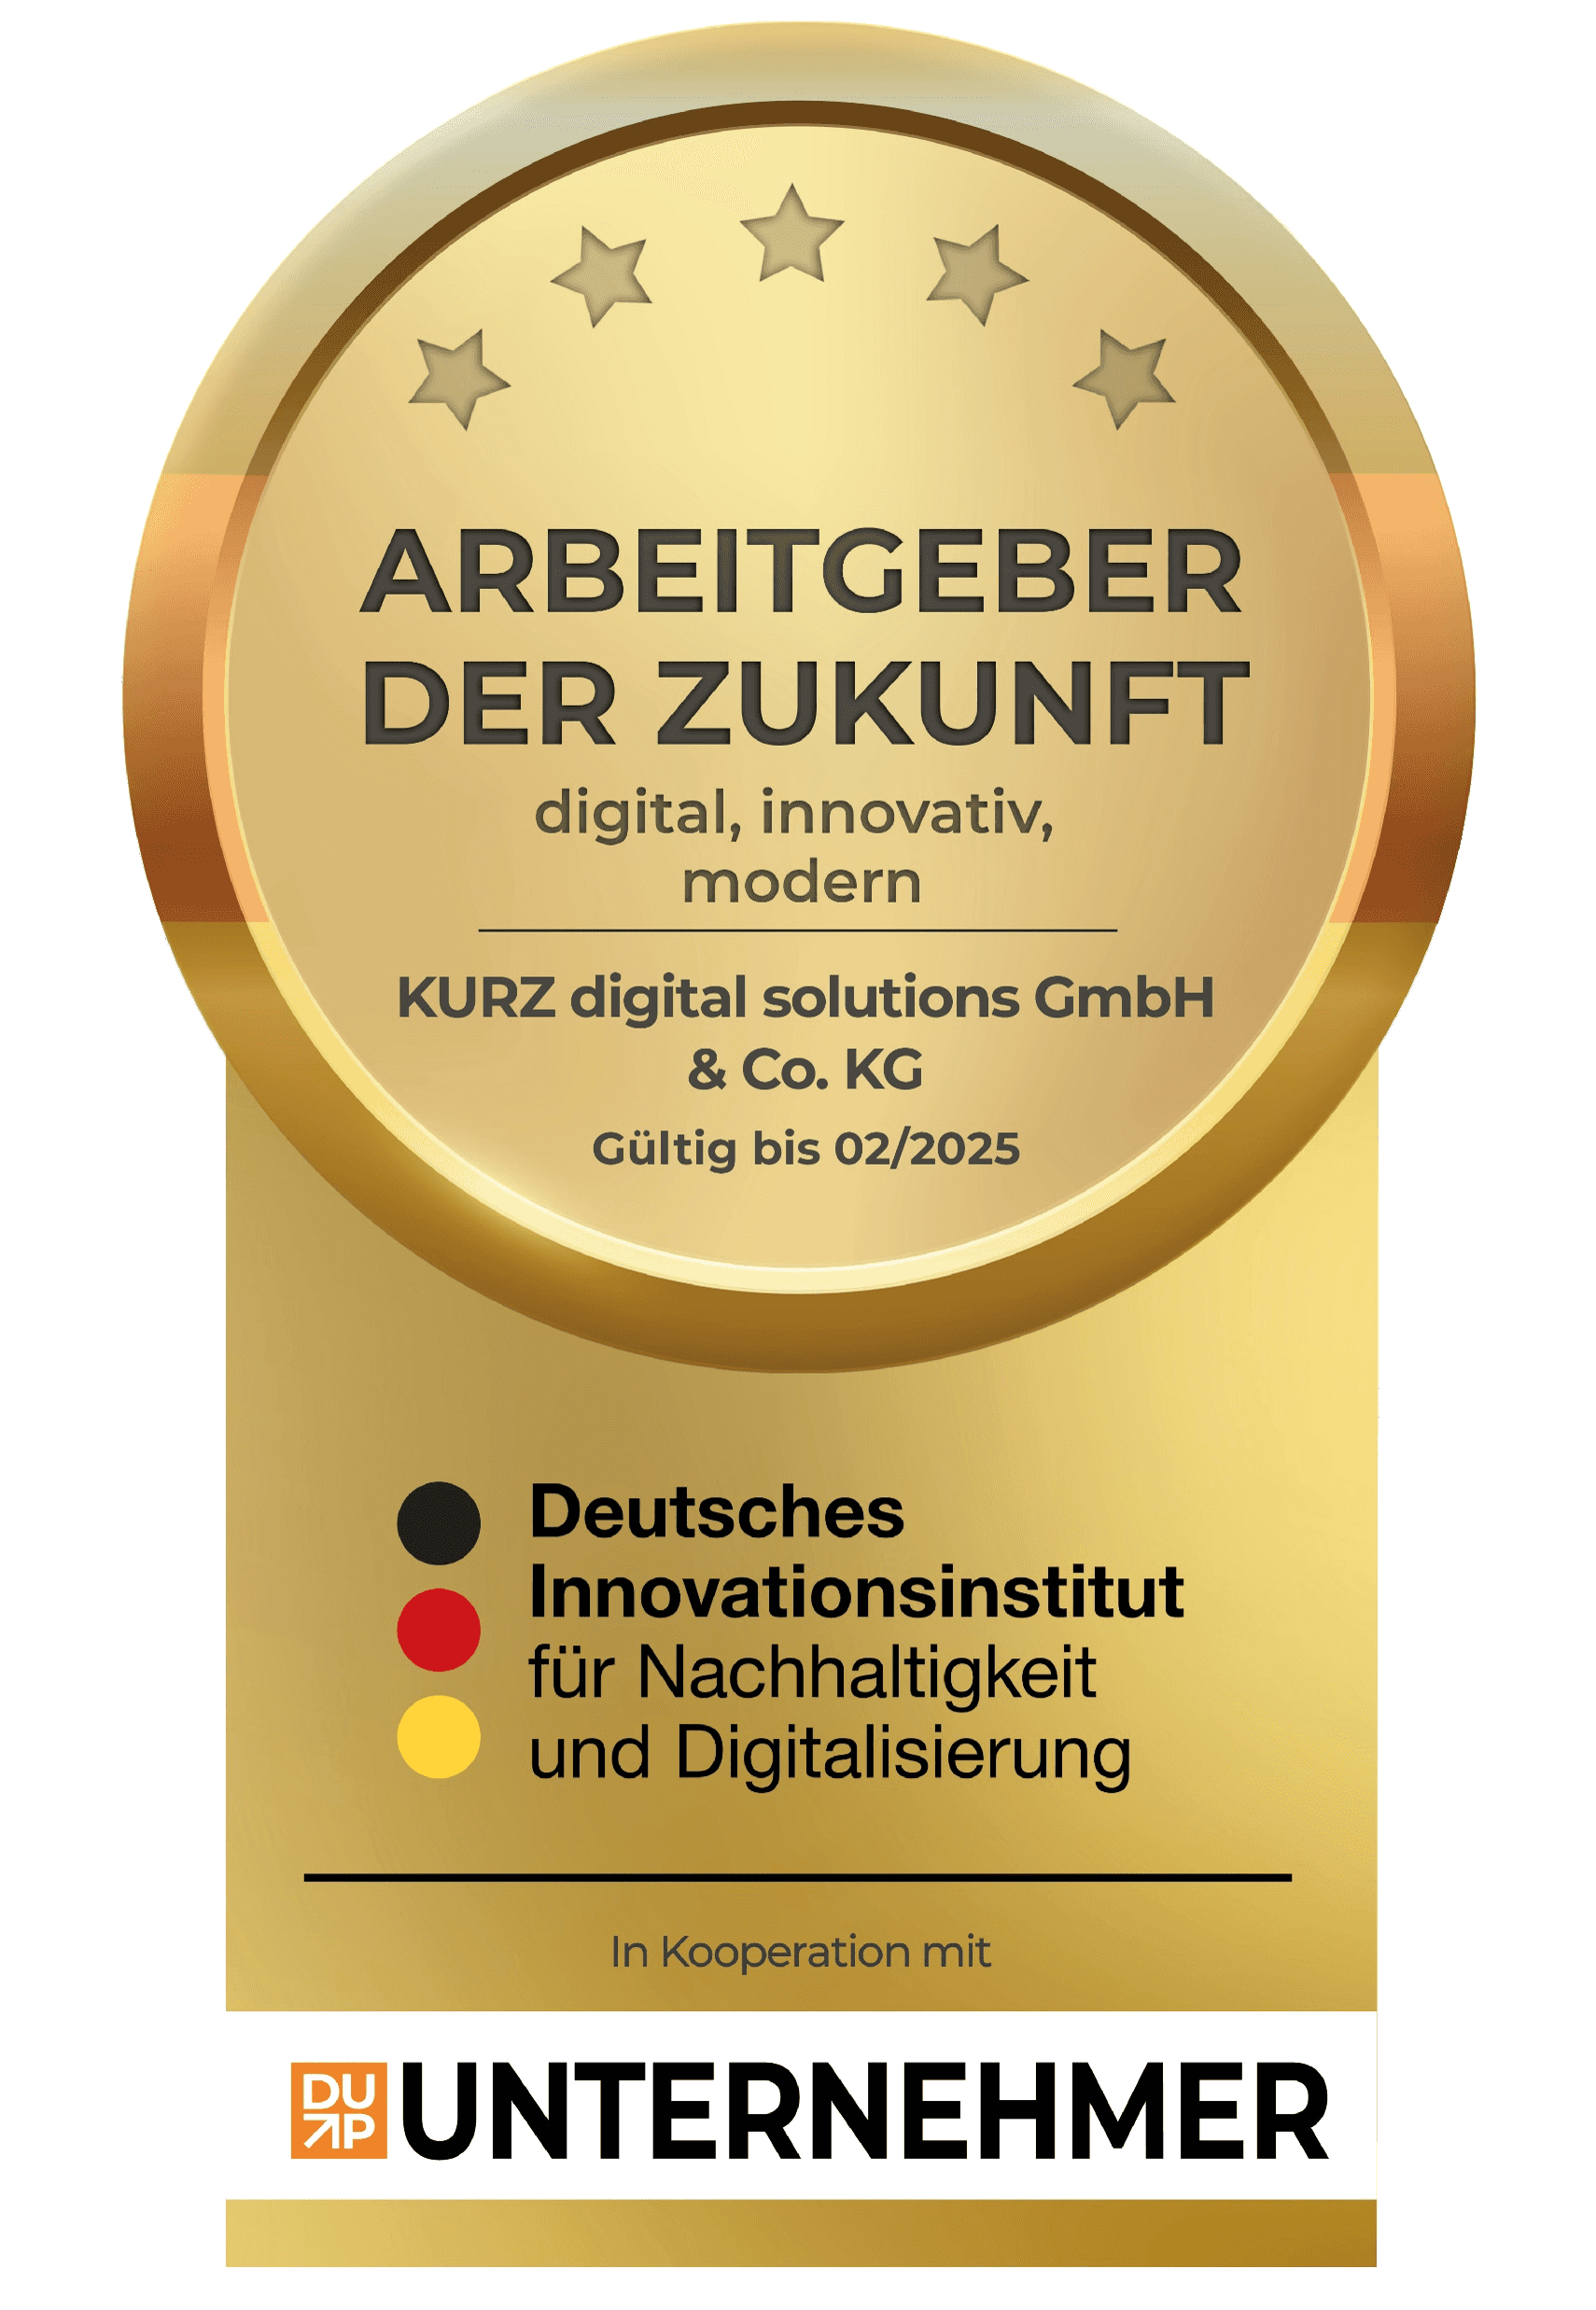 Employer of the Future Award 2023 Award